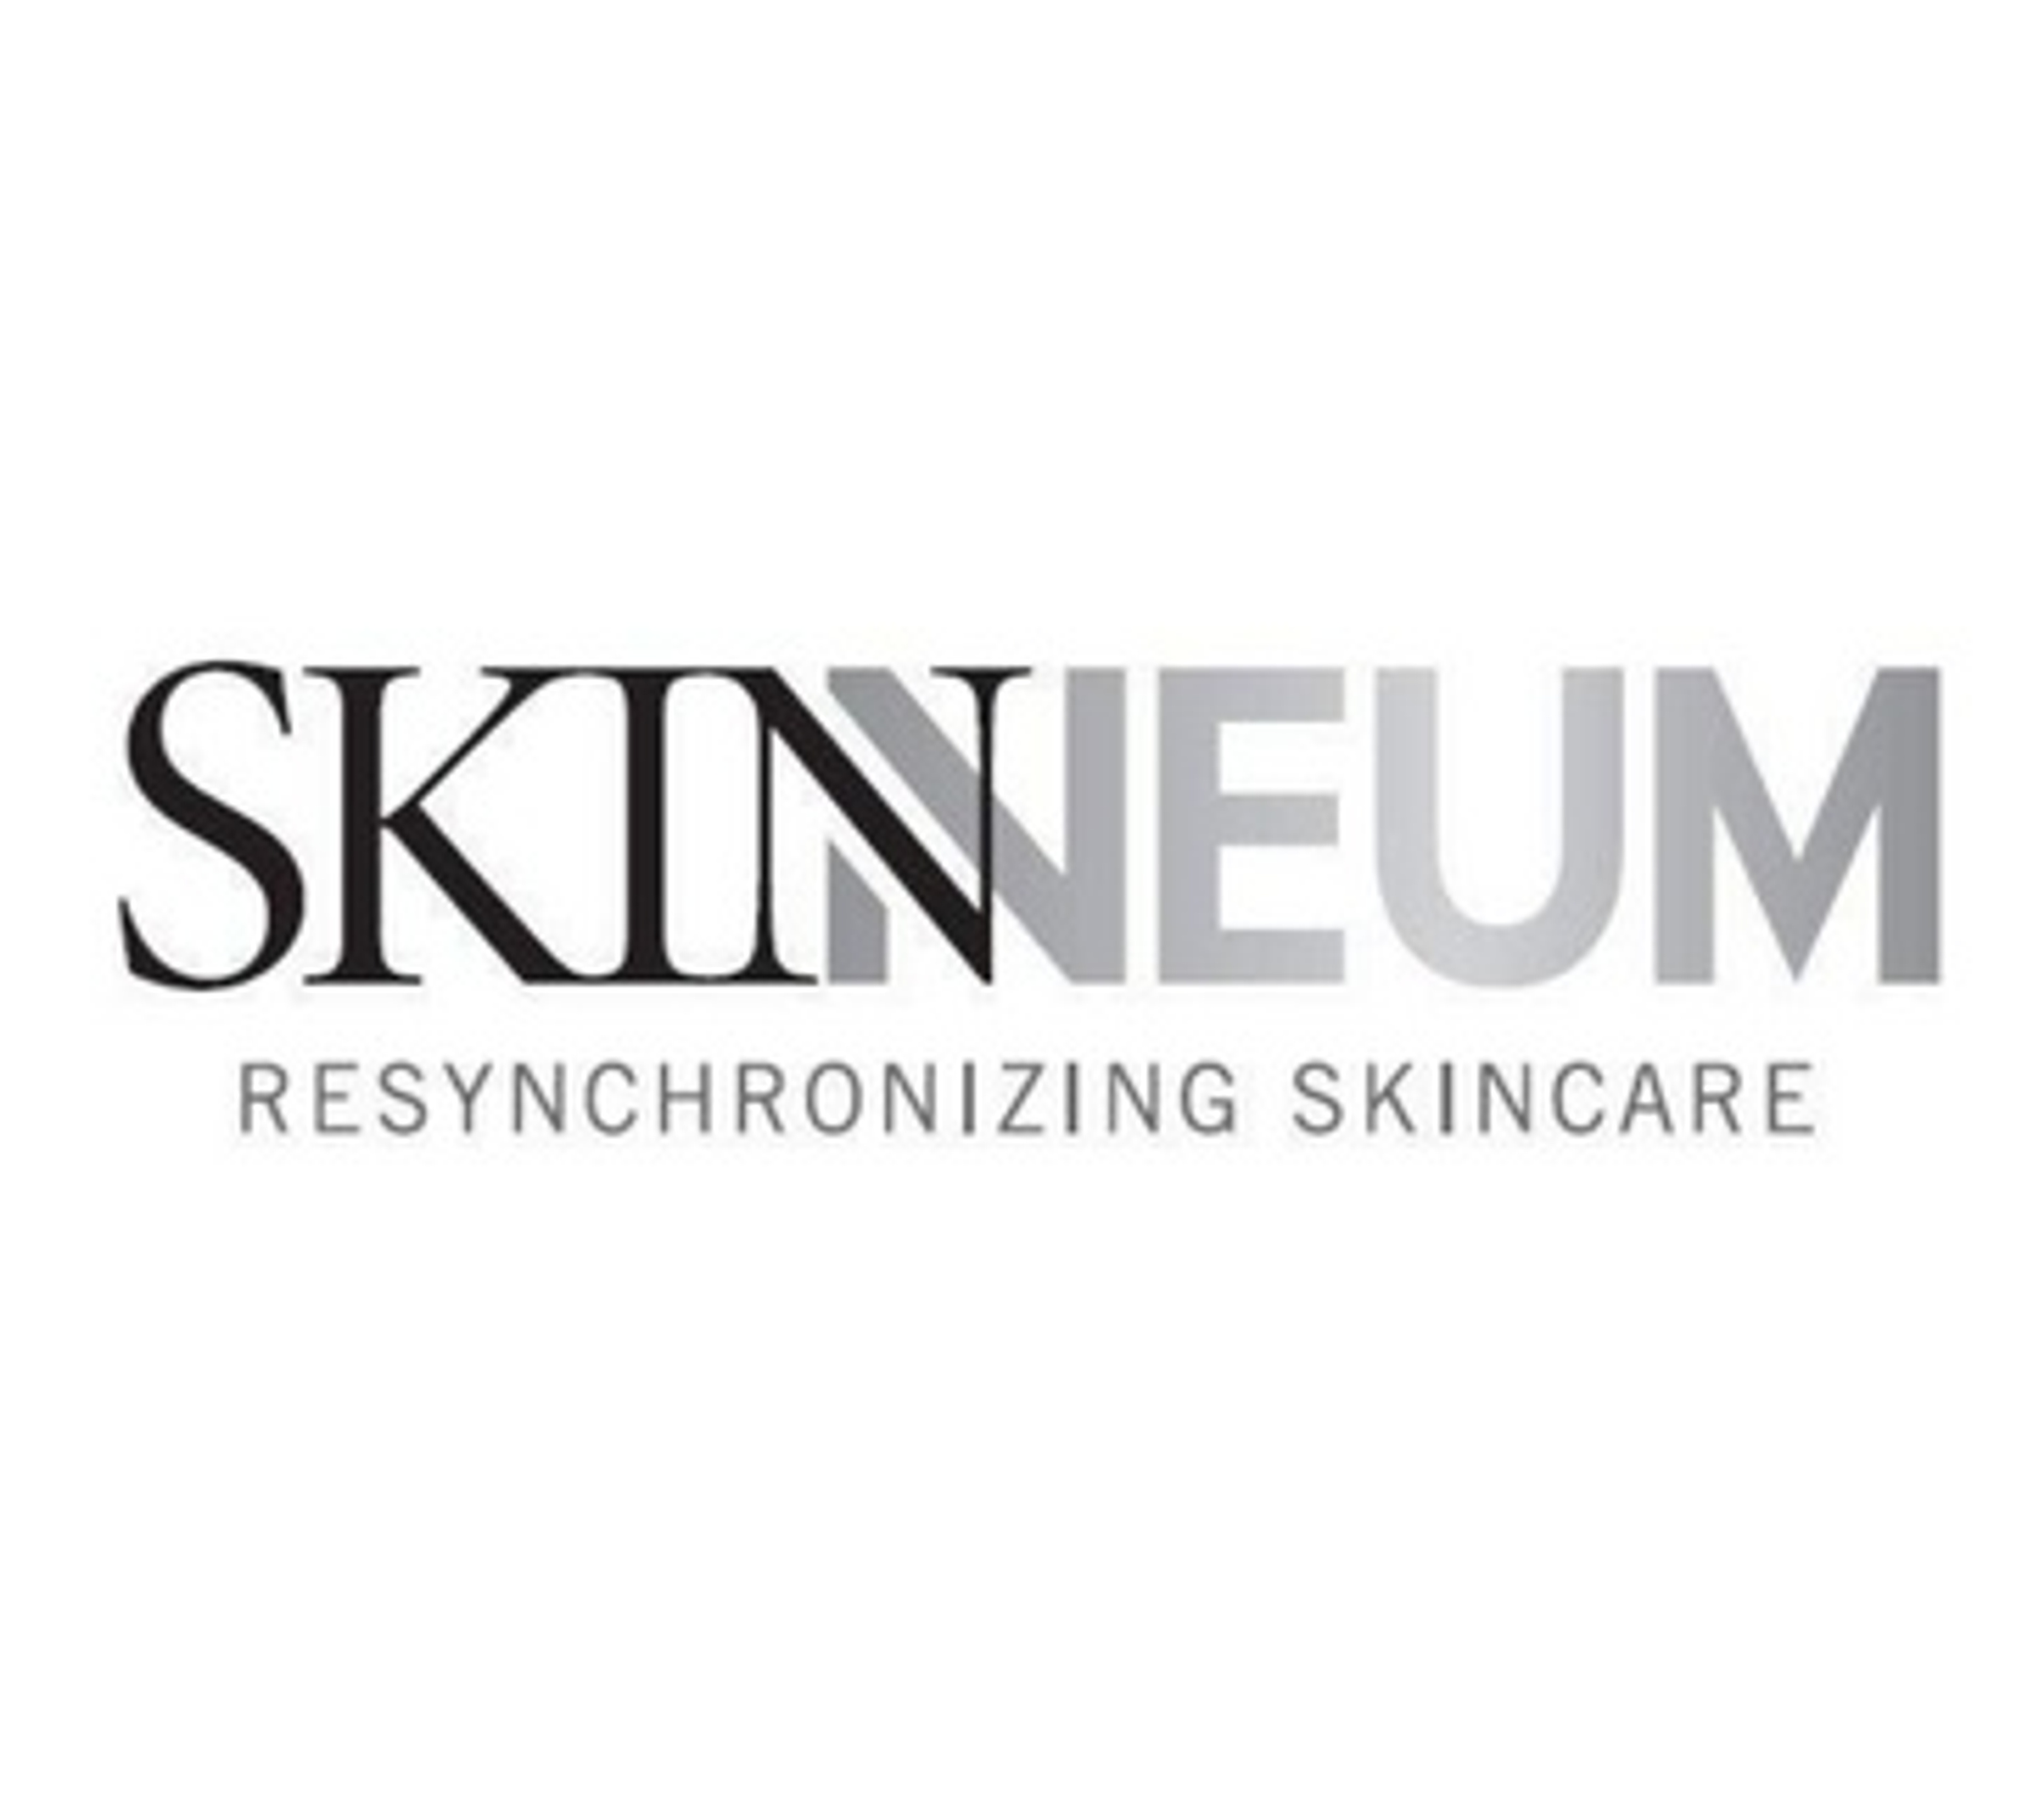 skinneum logo.png